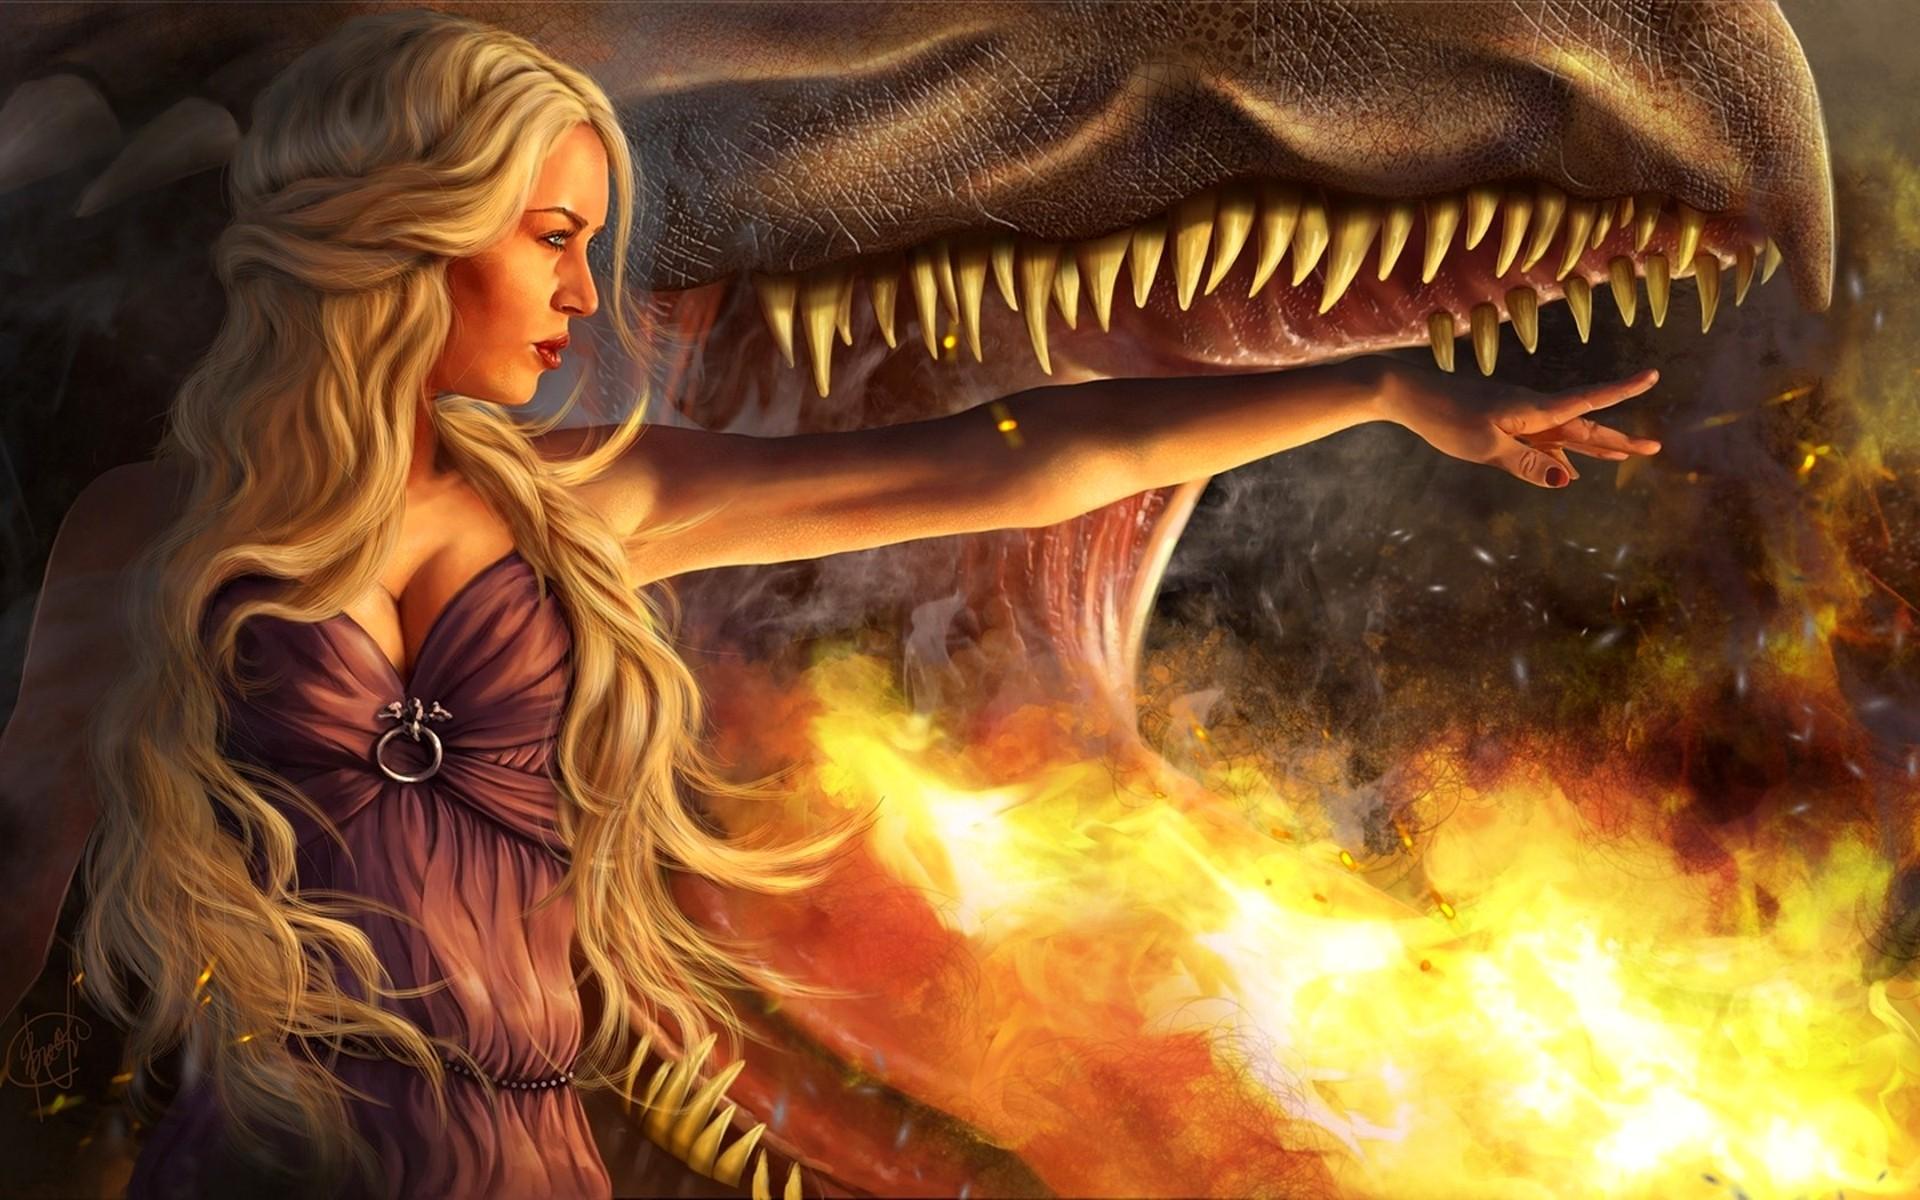 blondes, women, dragons, fire, Queen, fantasy art, artwork